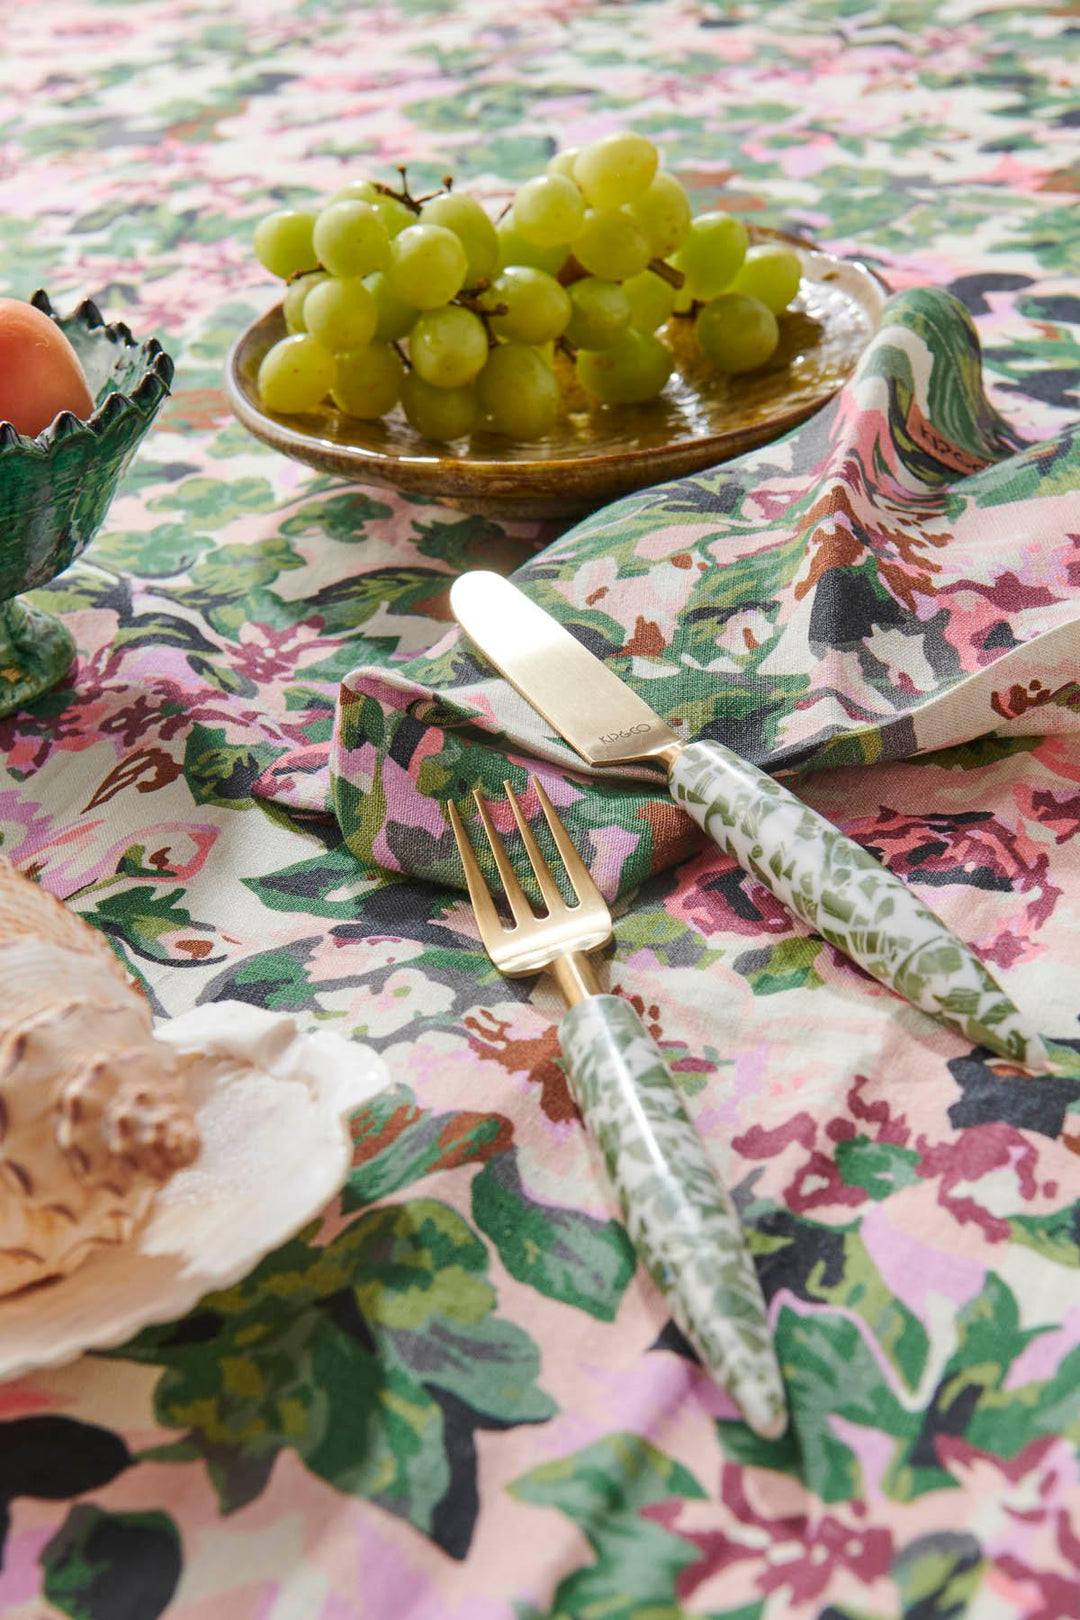 Garden Path Floral Linen Tablecloth - Kip & Co - Rubys Home Store 